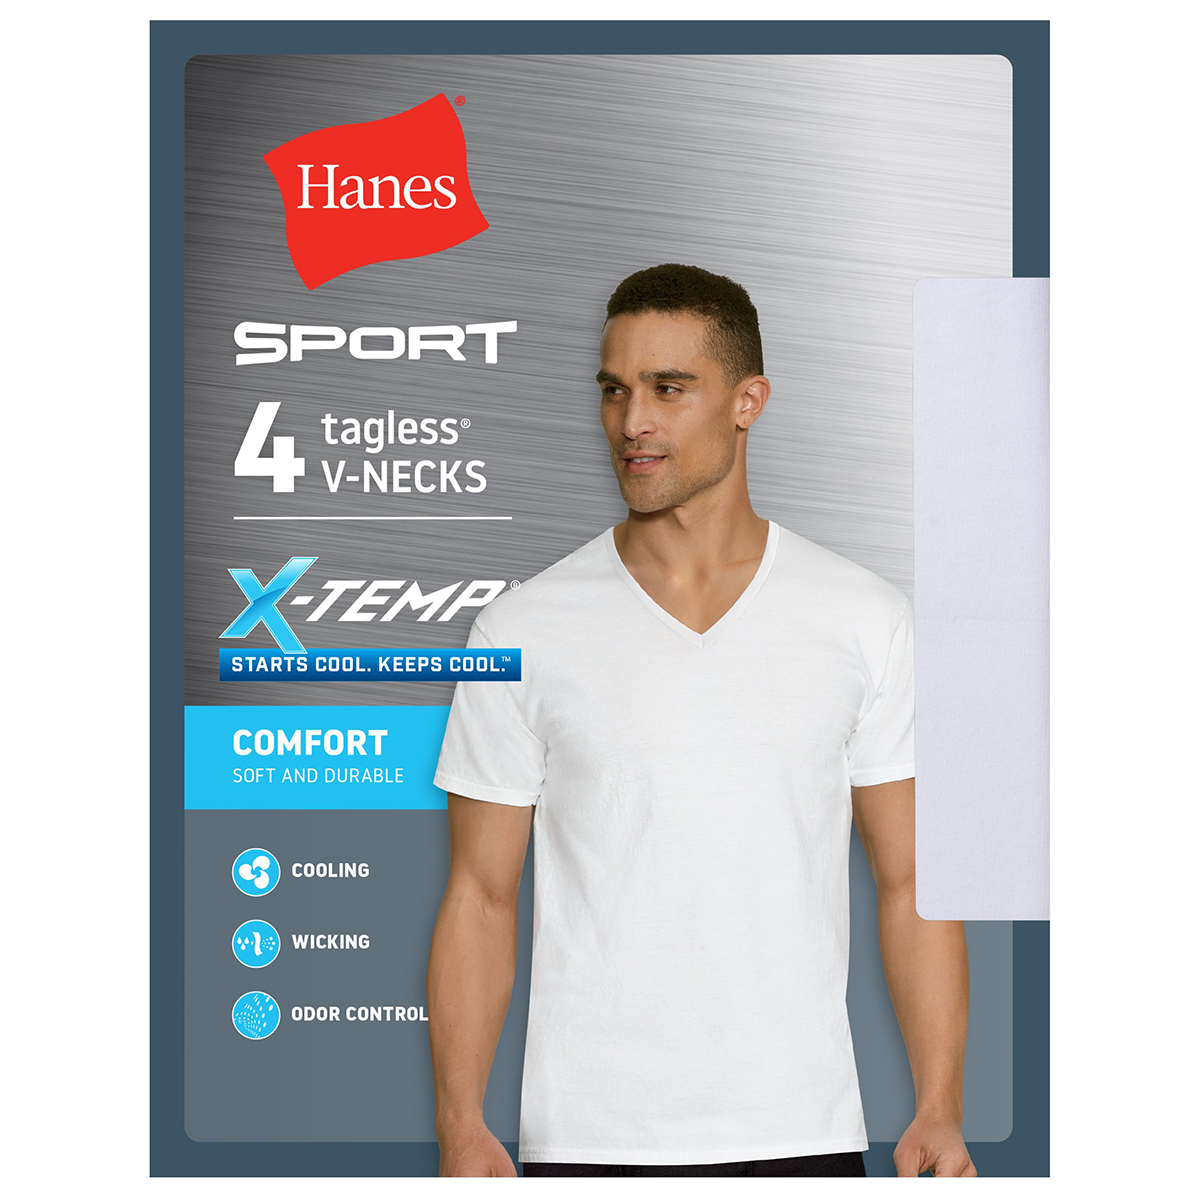 Hanes Men's Ultimate X-Temp Sport V-Neck Undershirts, 4-Pack